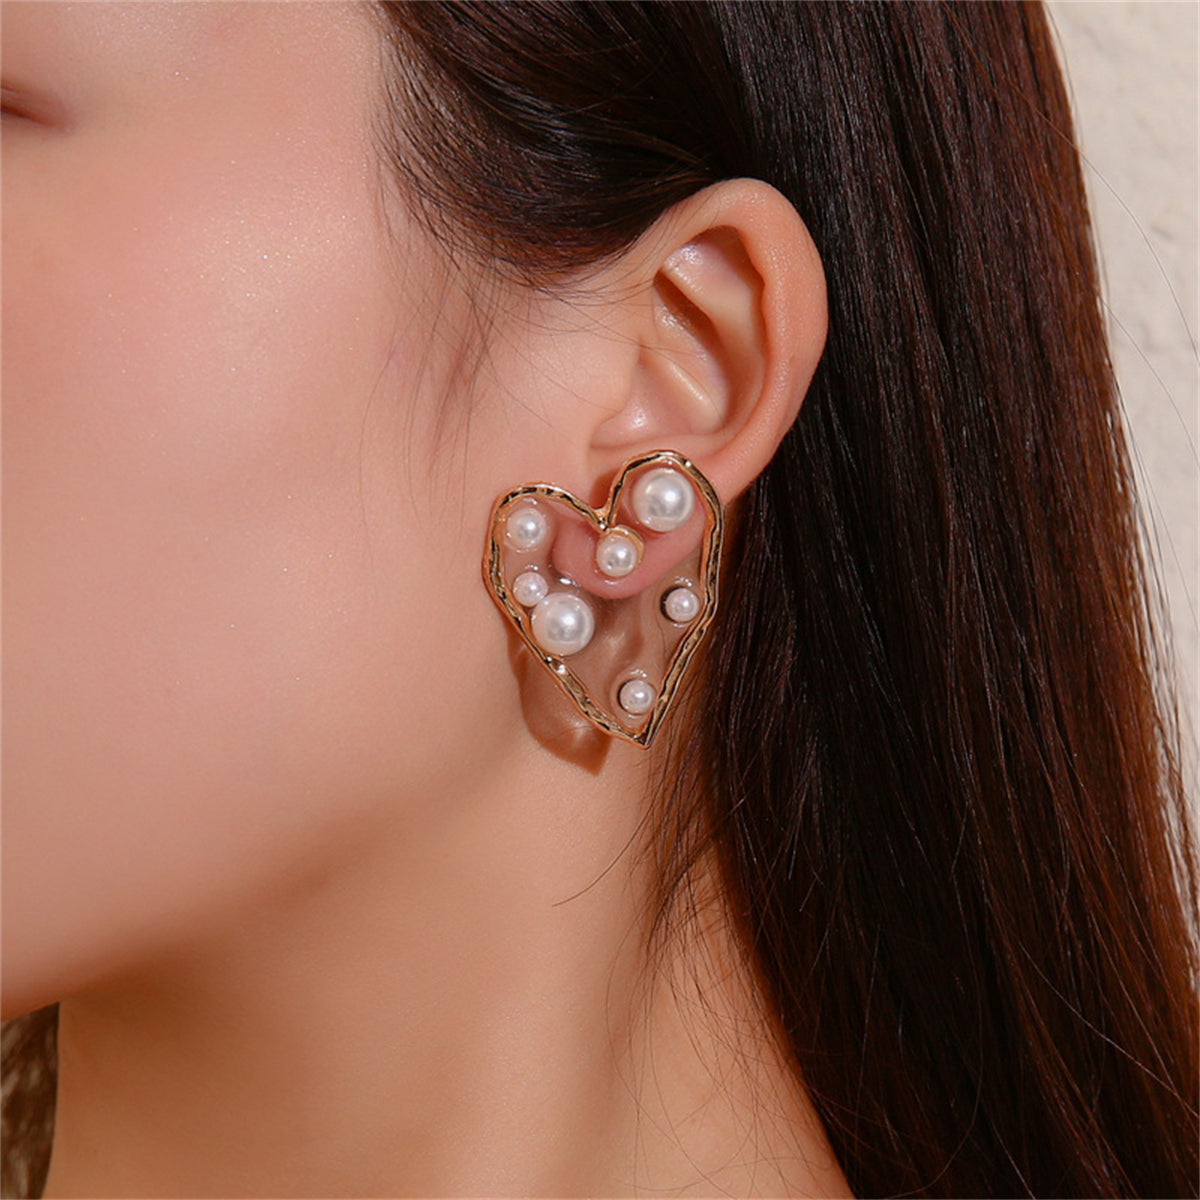 Pearl & Resin 18K Gold-Plated Heart Stud Earrings